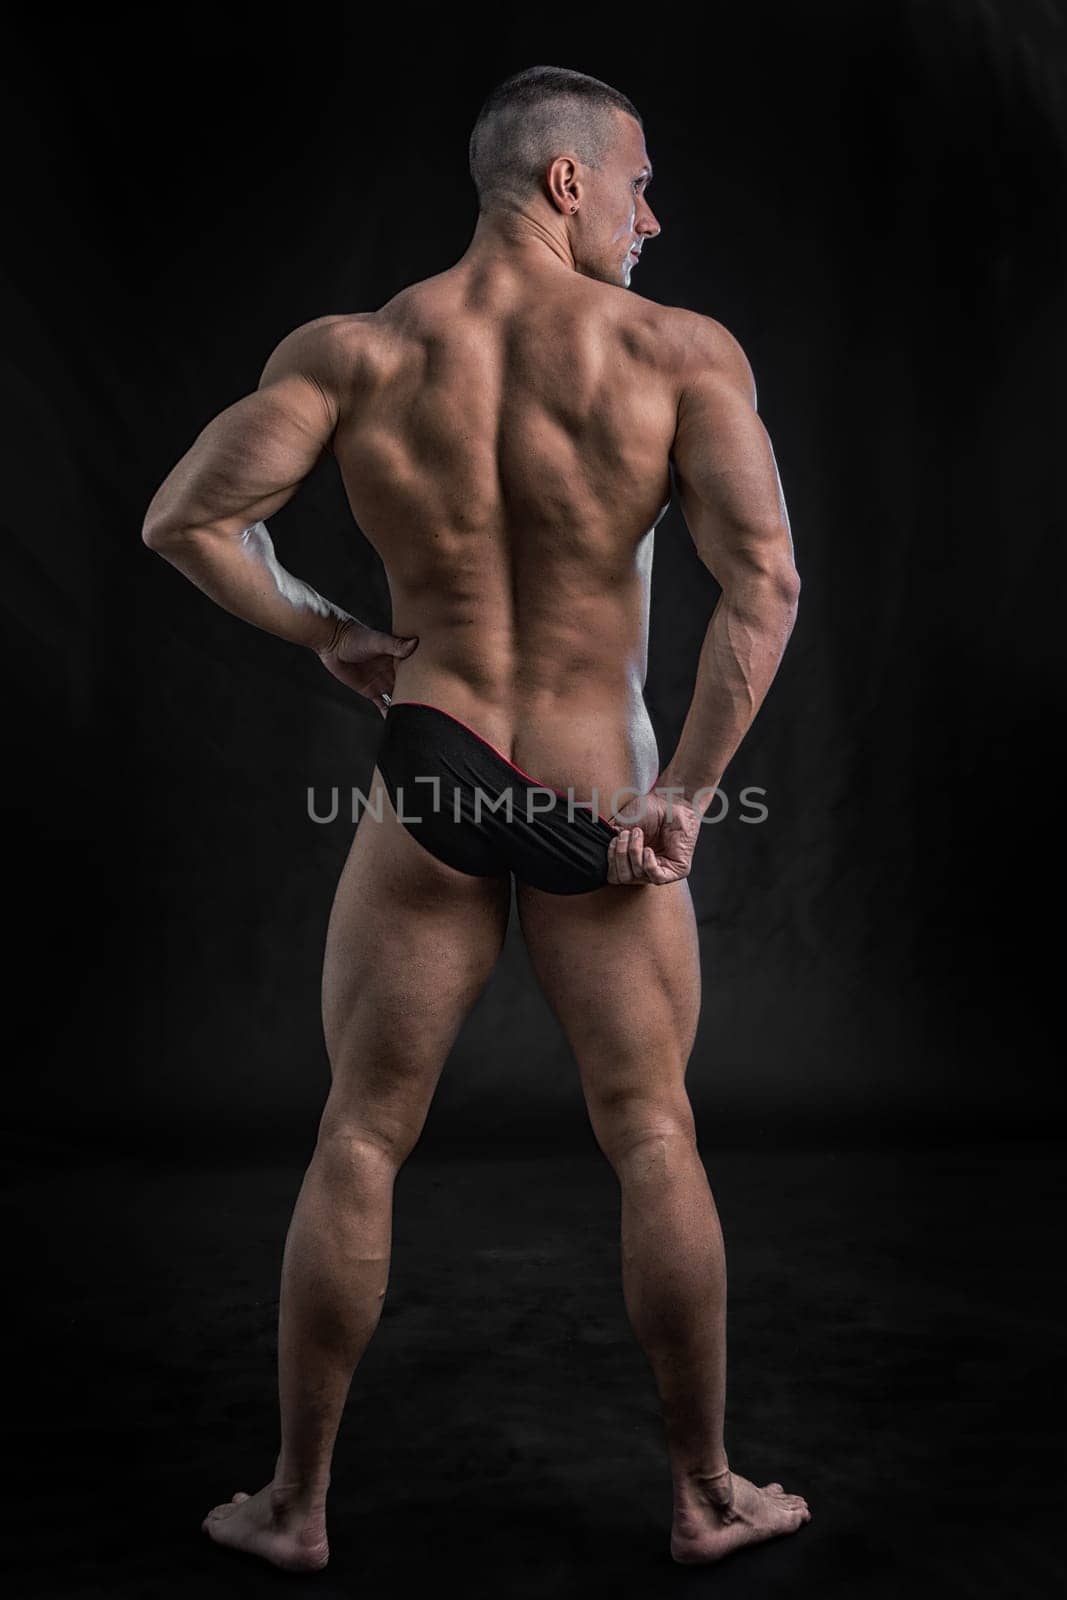 Muscular man pulling down underwear to show his butt, in studio shot